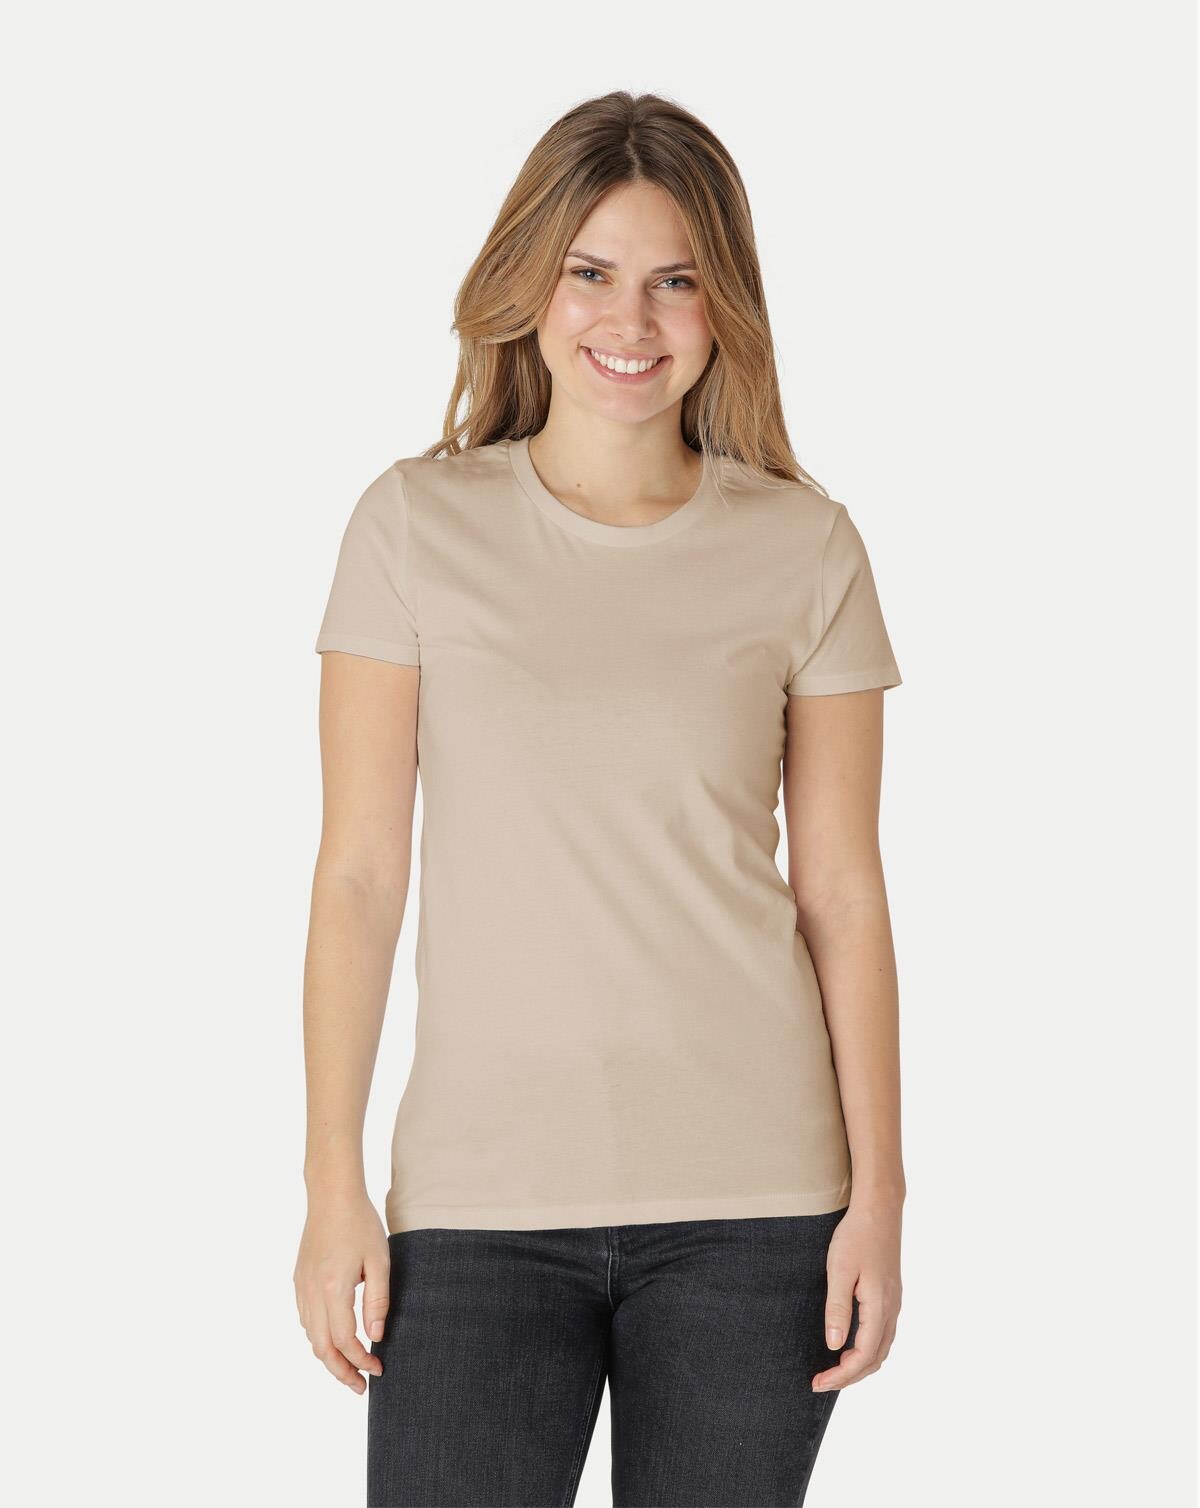 Neutral Økologisk Dame Tætsiddende T-Shirt (Sand, S)